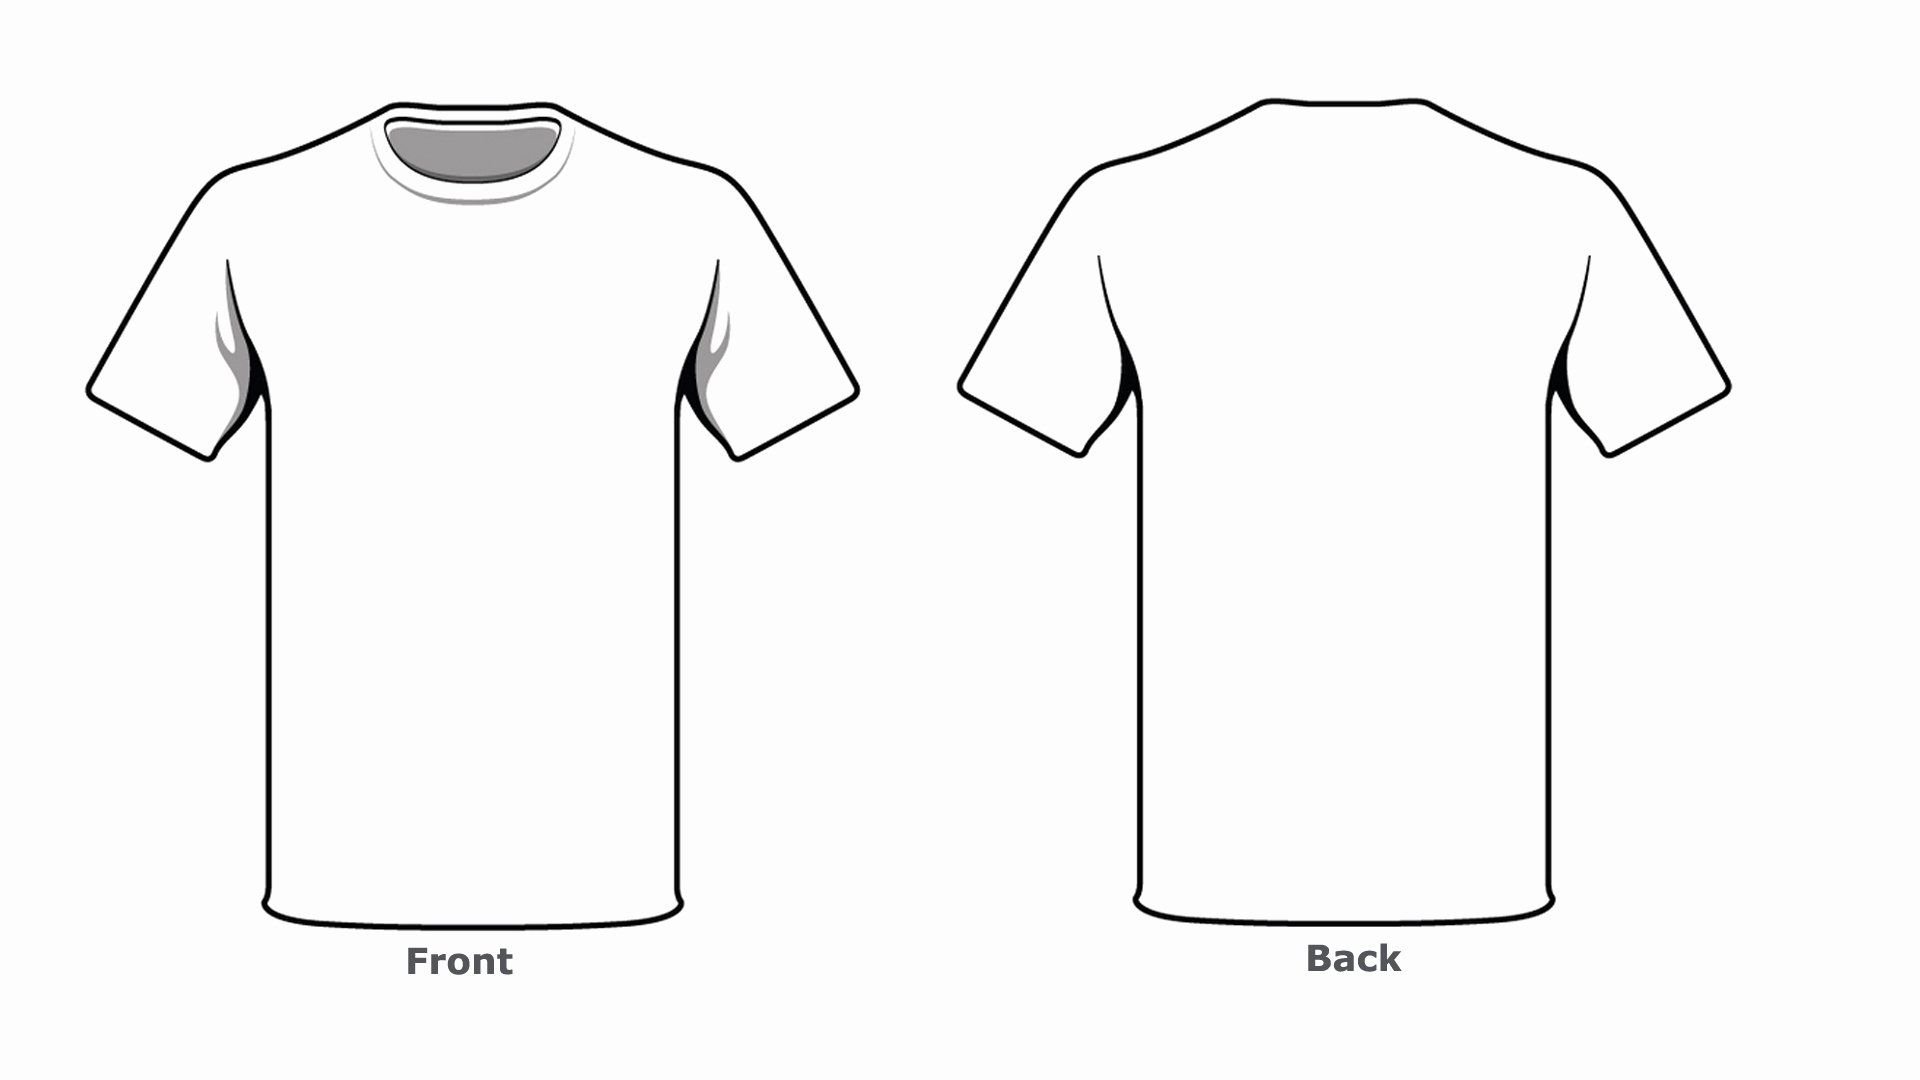 Blank Tshirt Template Elegant Blank Tshirt Template Front Back Side In High Resolution Shirt Template T Shirt Design Template Blank T Shirts